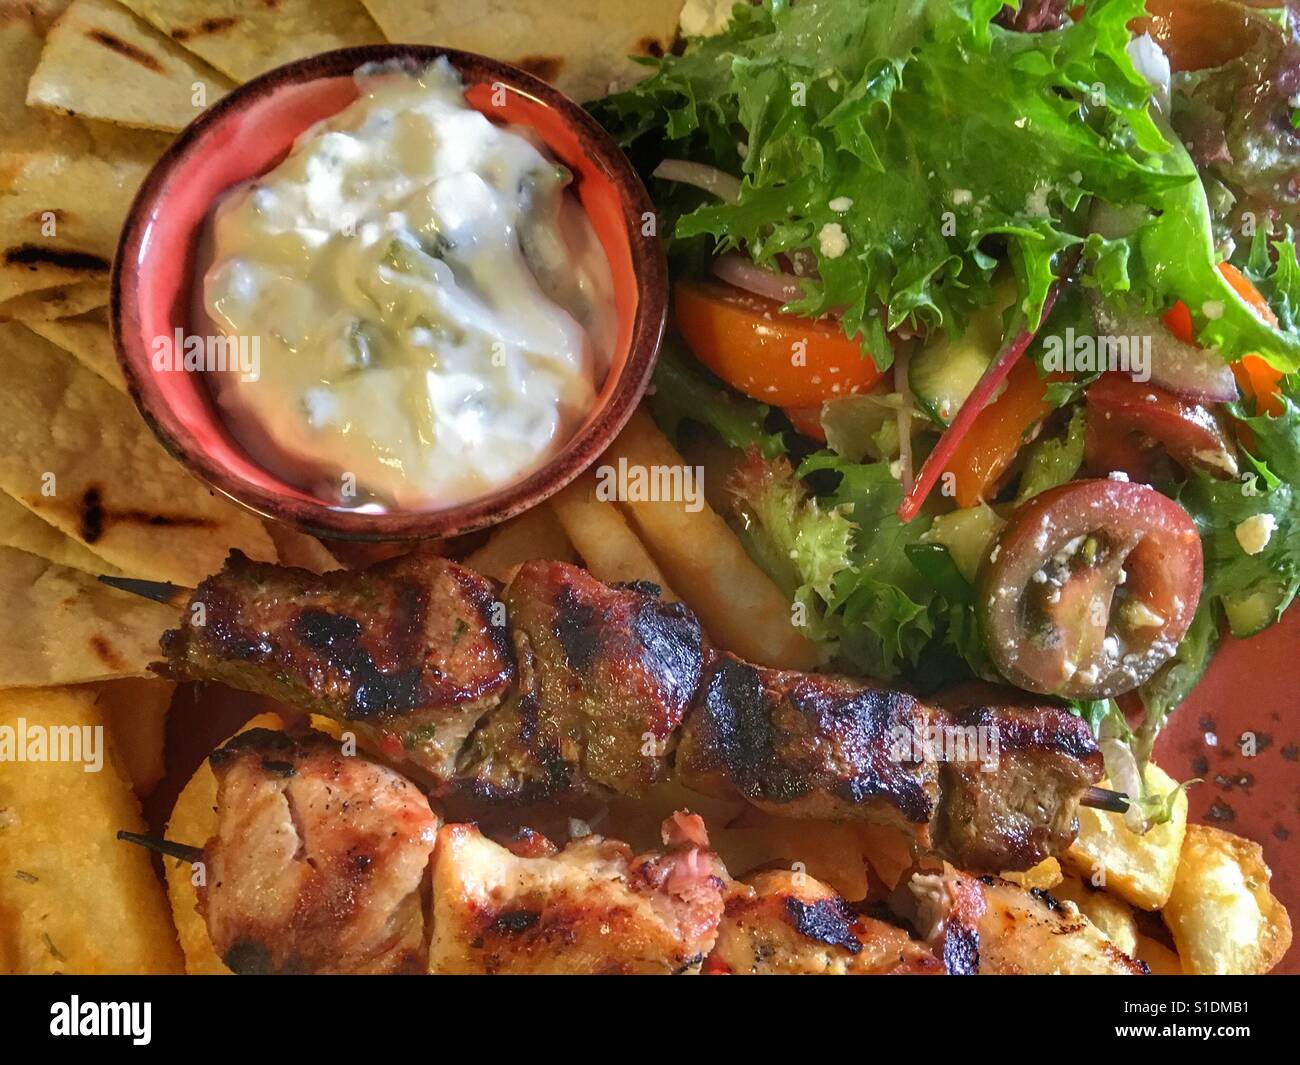 Souvlaki, peta, salad, hot chips & sauce' Stock Photo